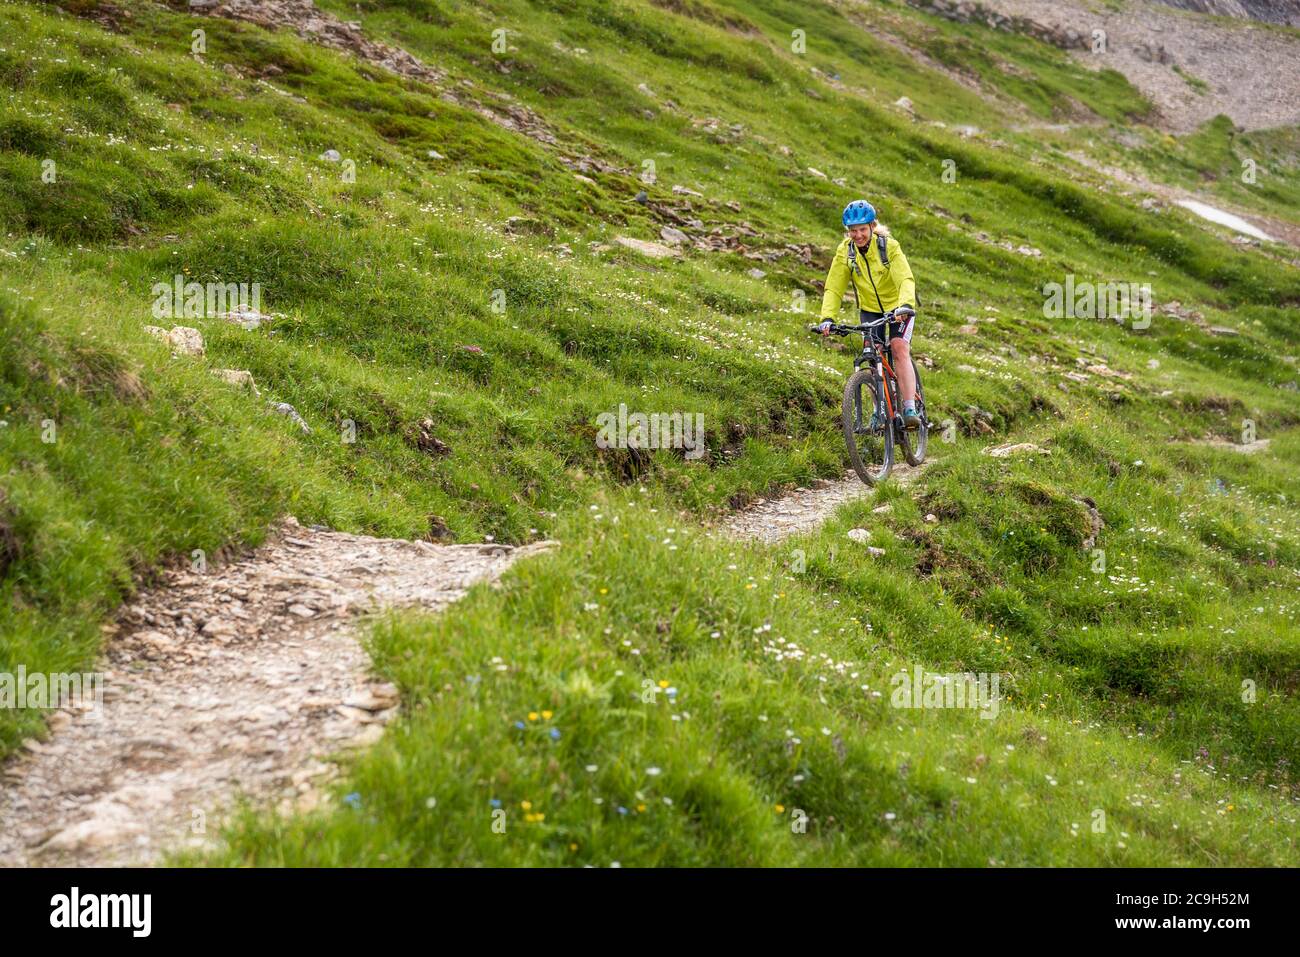 Mountain biker rides on Singeltrail, difficulty level S1, Serfaus, Tyrol, Austria Stock Photo